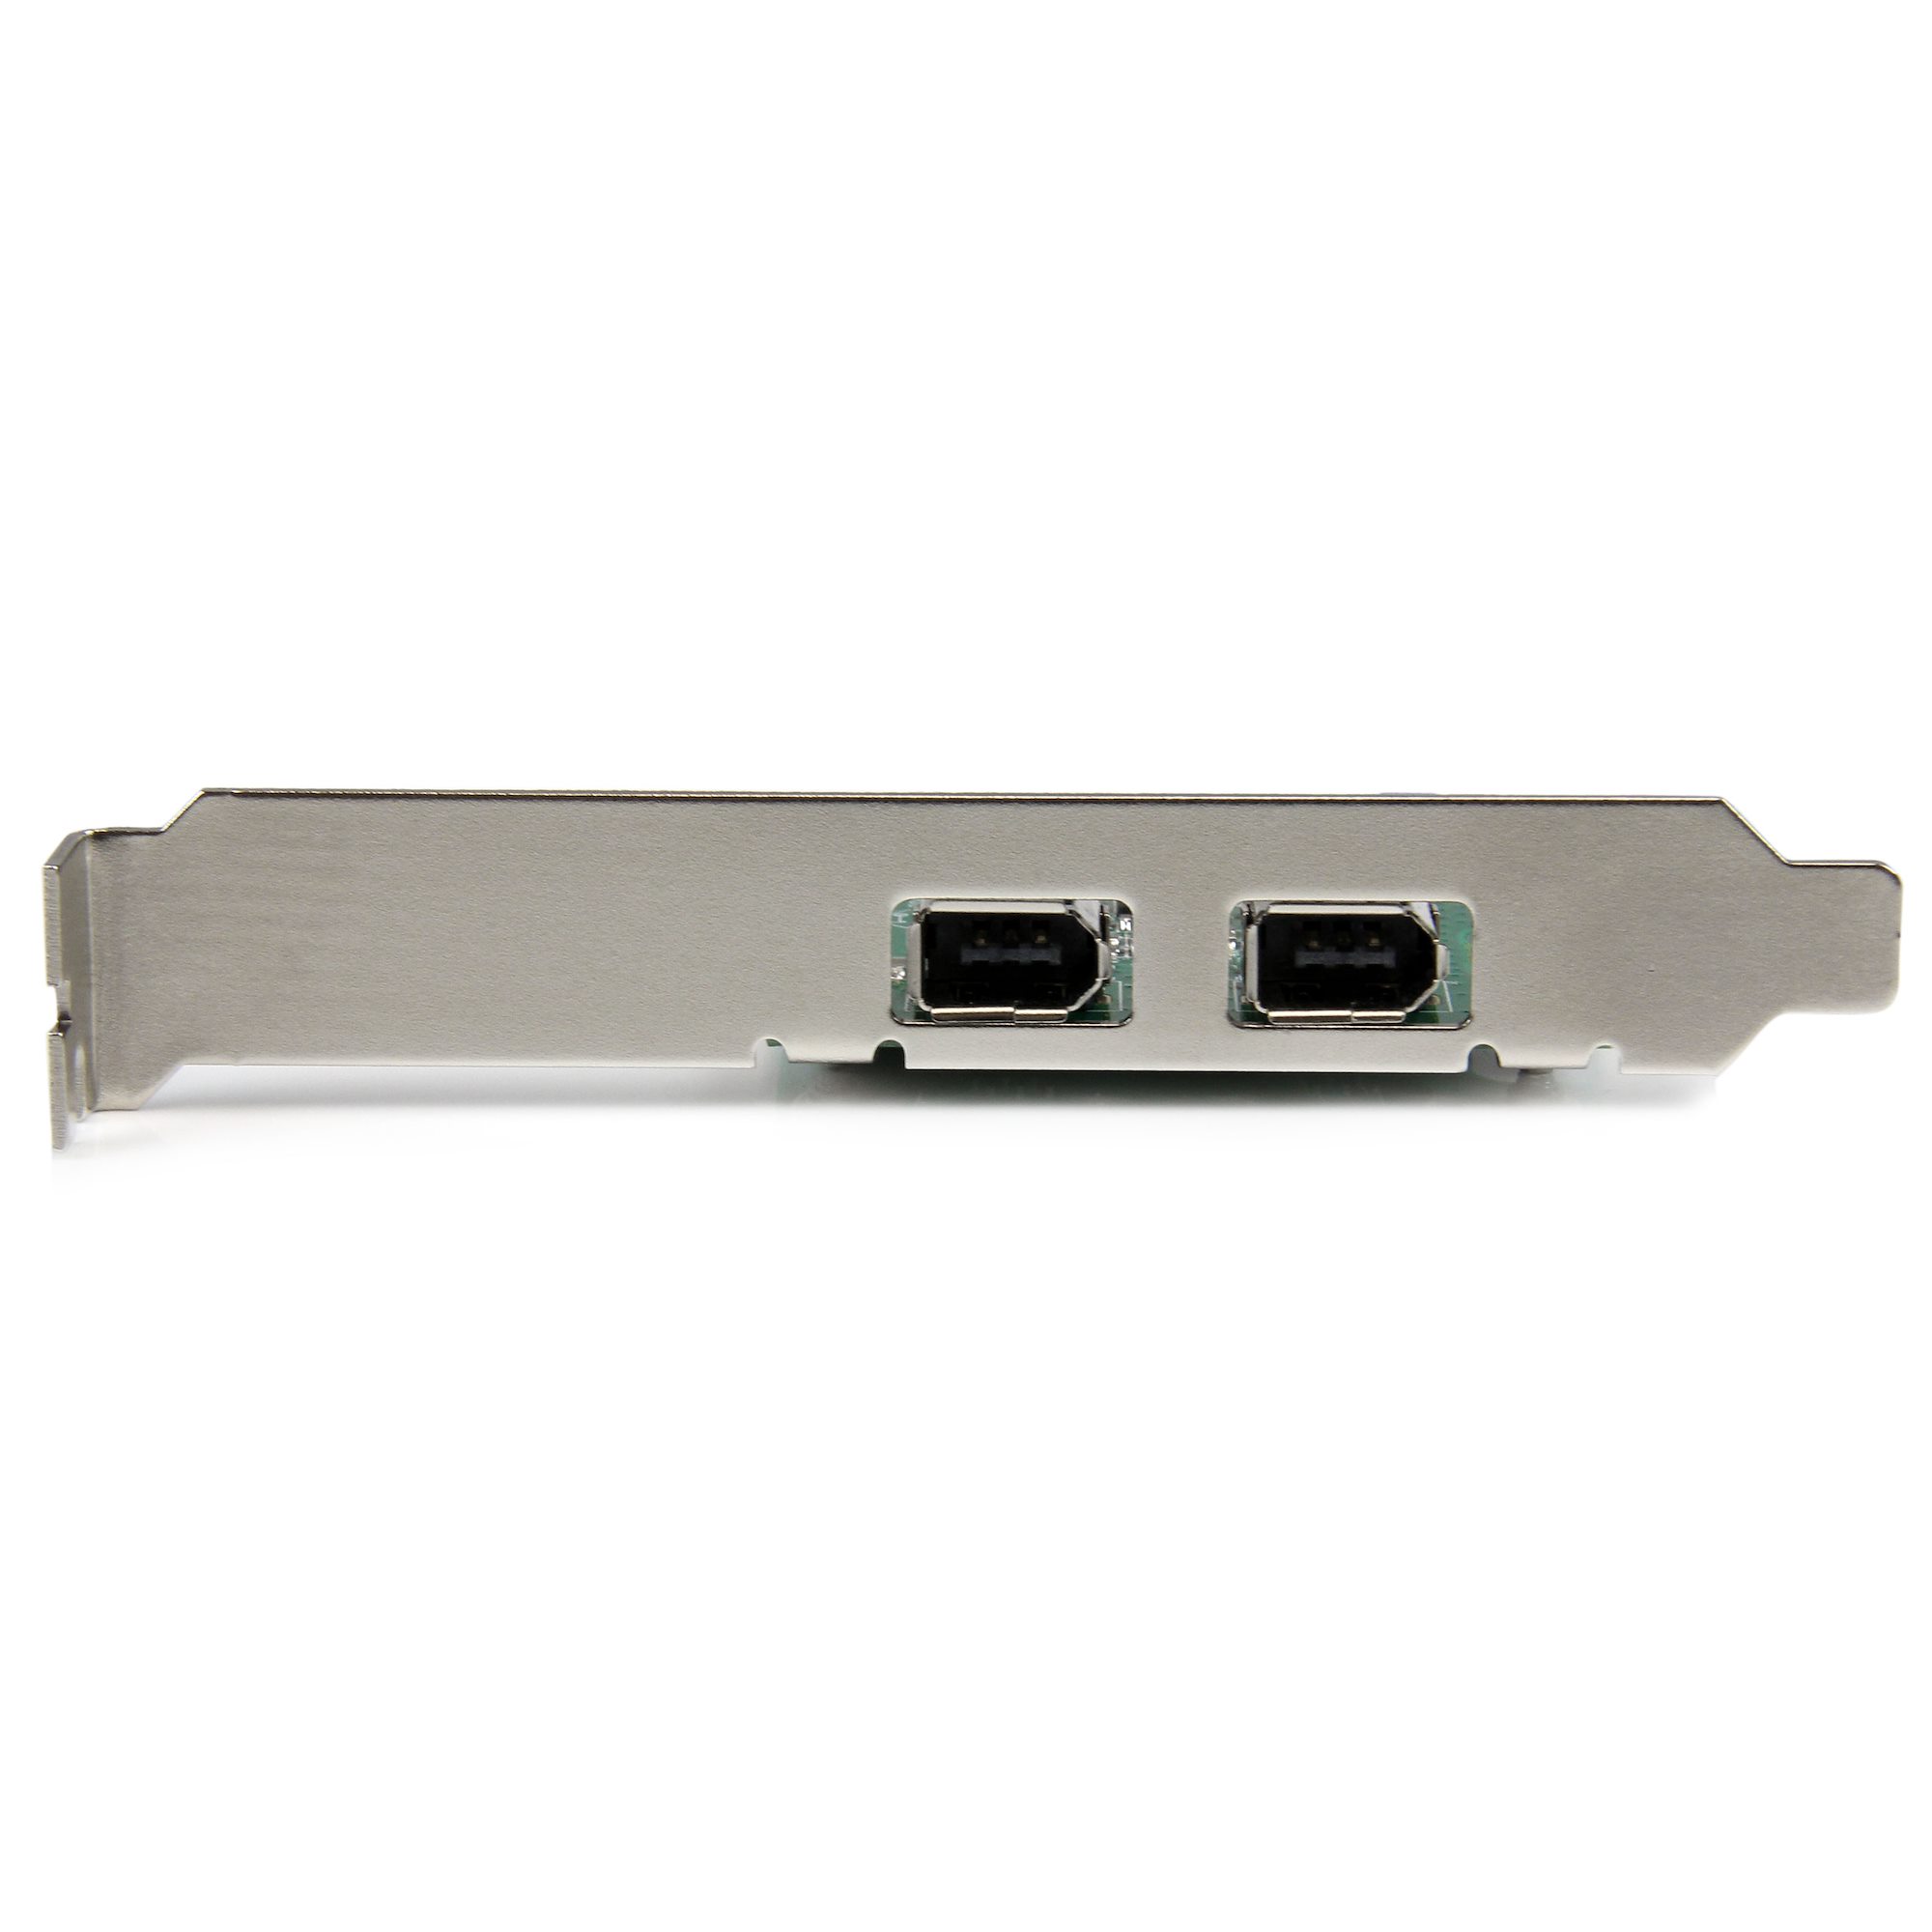 2 Port 1394a PCI Express FireWire Card - FireWire Cards | Add-on